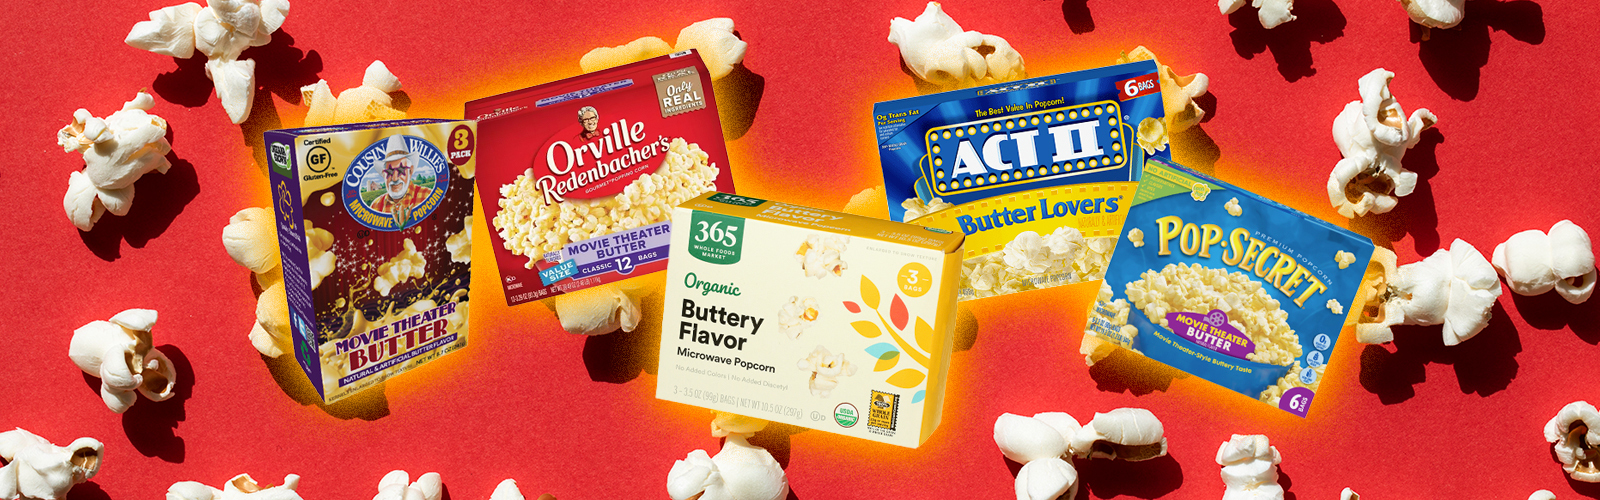 Review: The Tasty brand Microwave Popcorn Popper